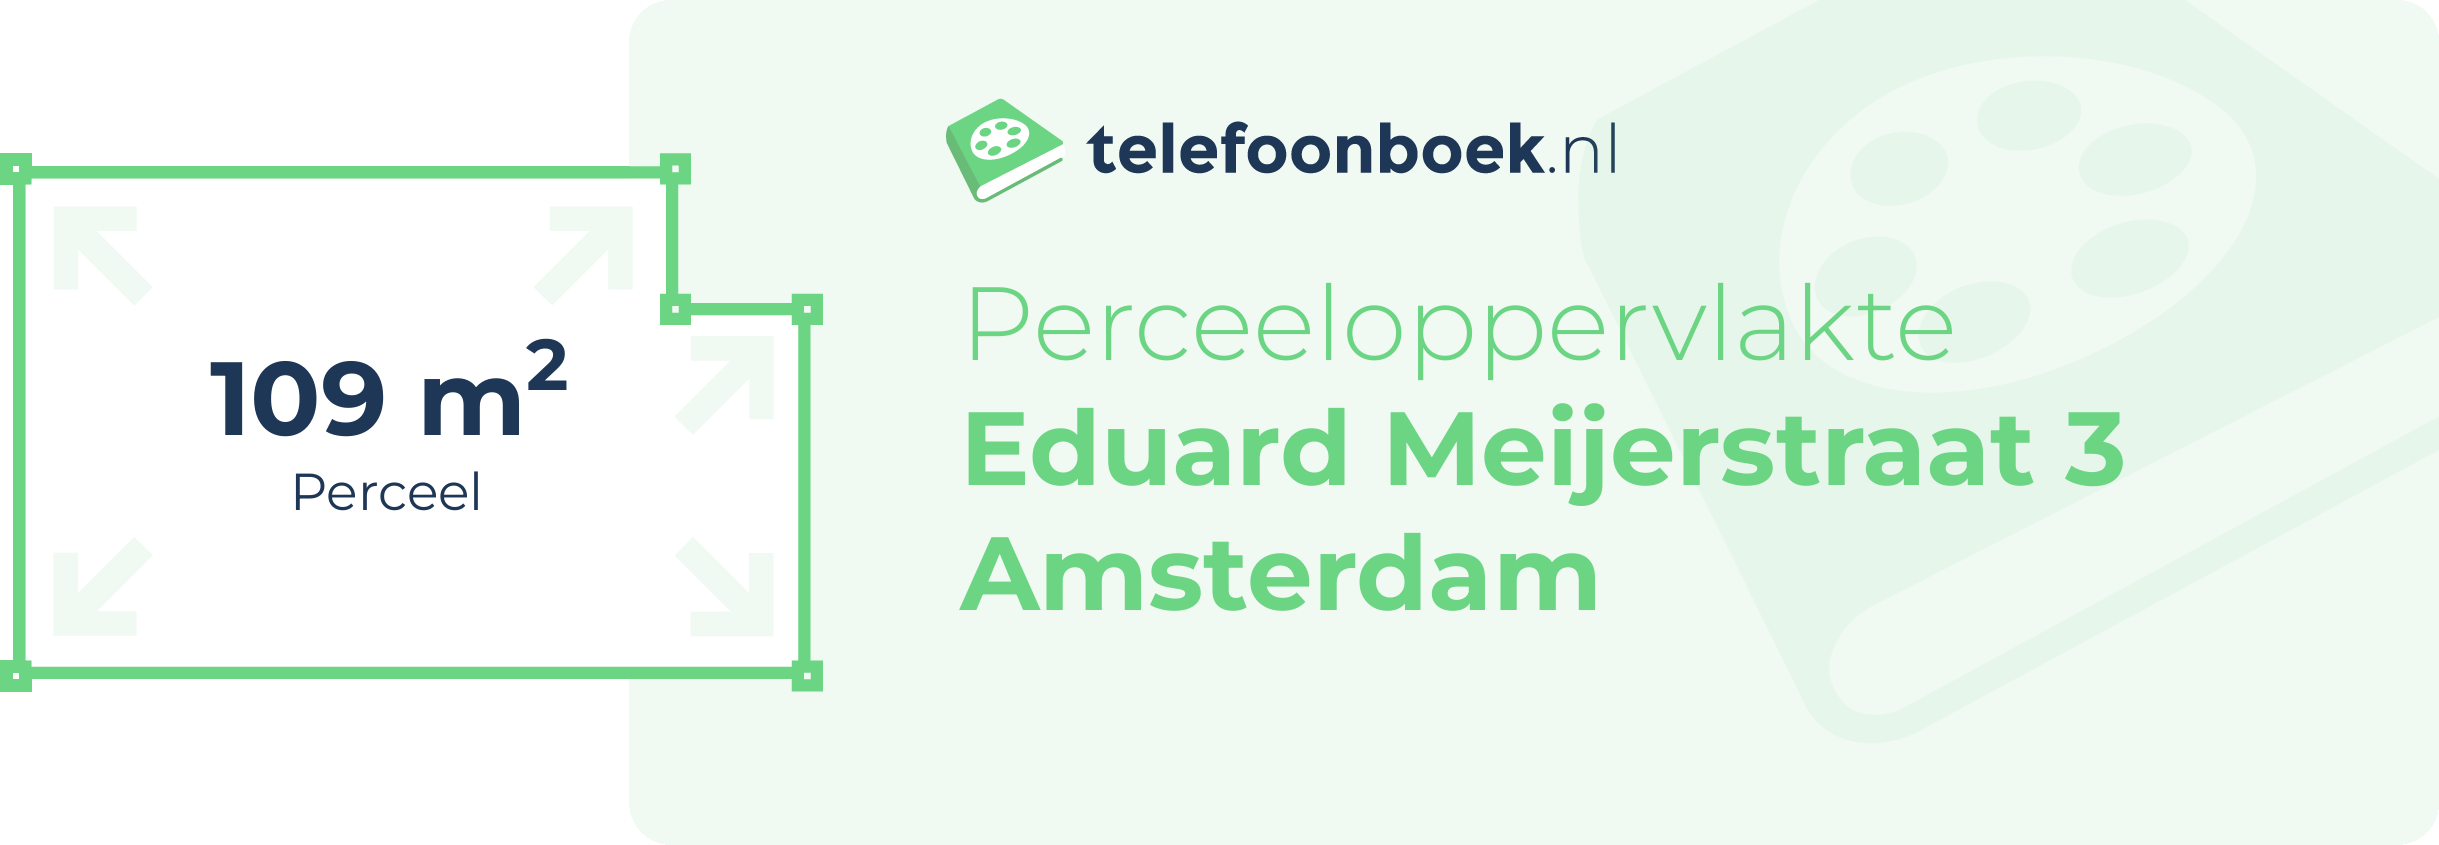 Perceeloppervlakte Eduard Meijerstraat 3 Amsterdam